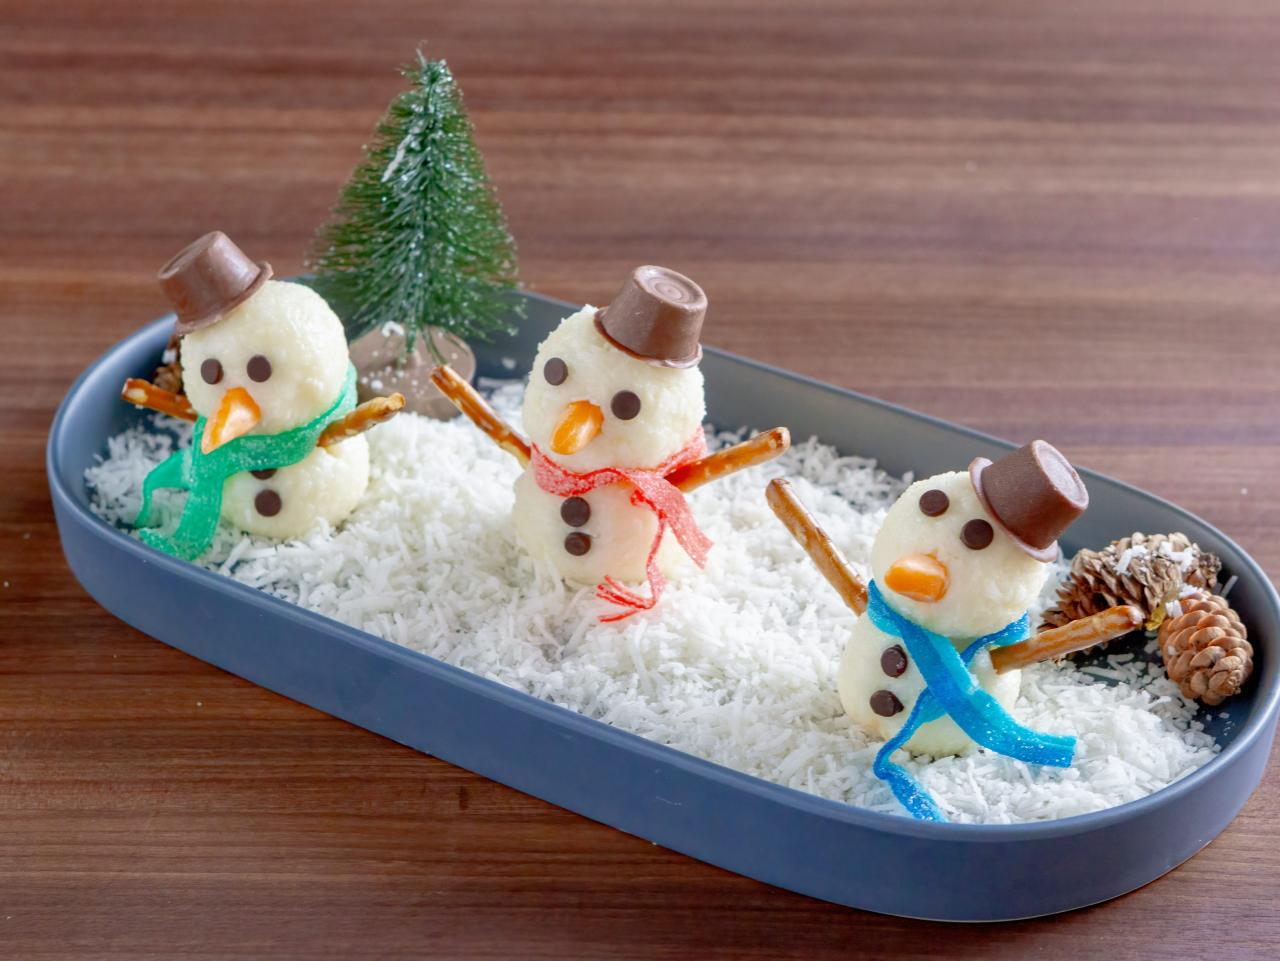 Melting Snowman - Toy Network